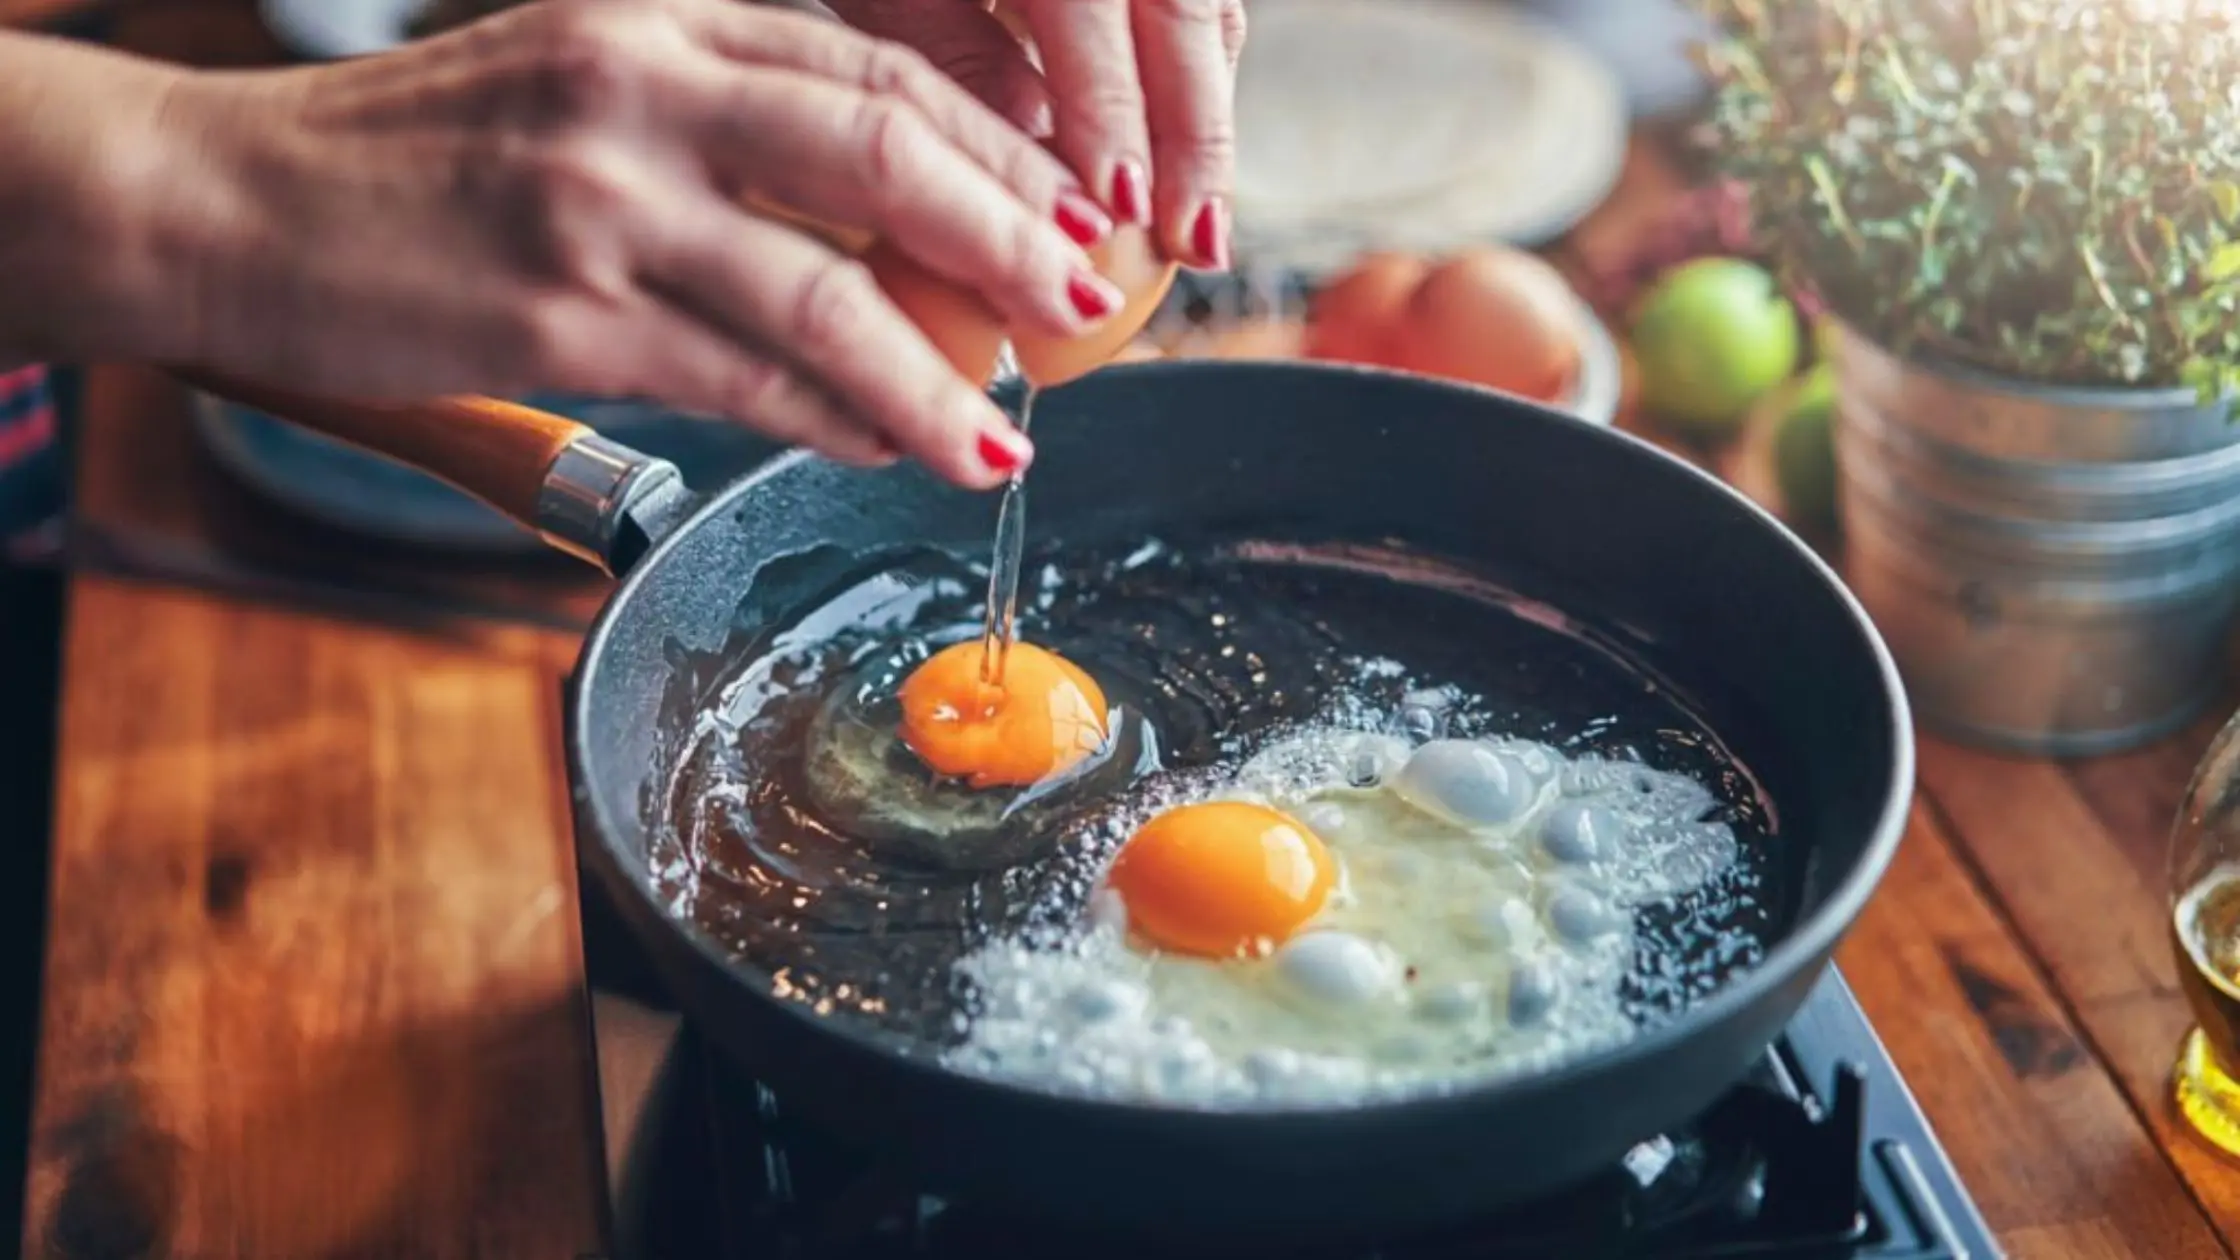 TikTok 10-Day Egg Diet Trend